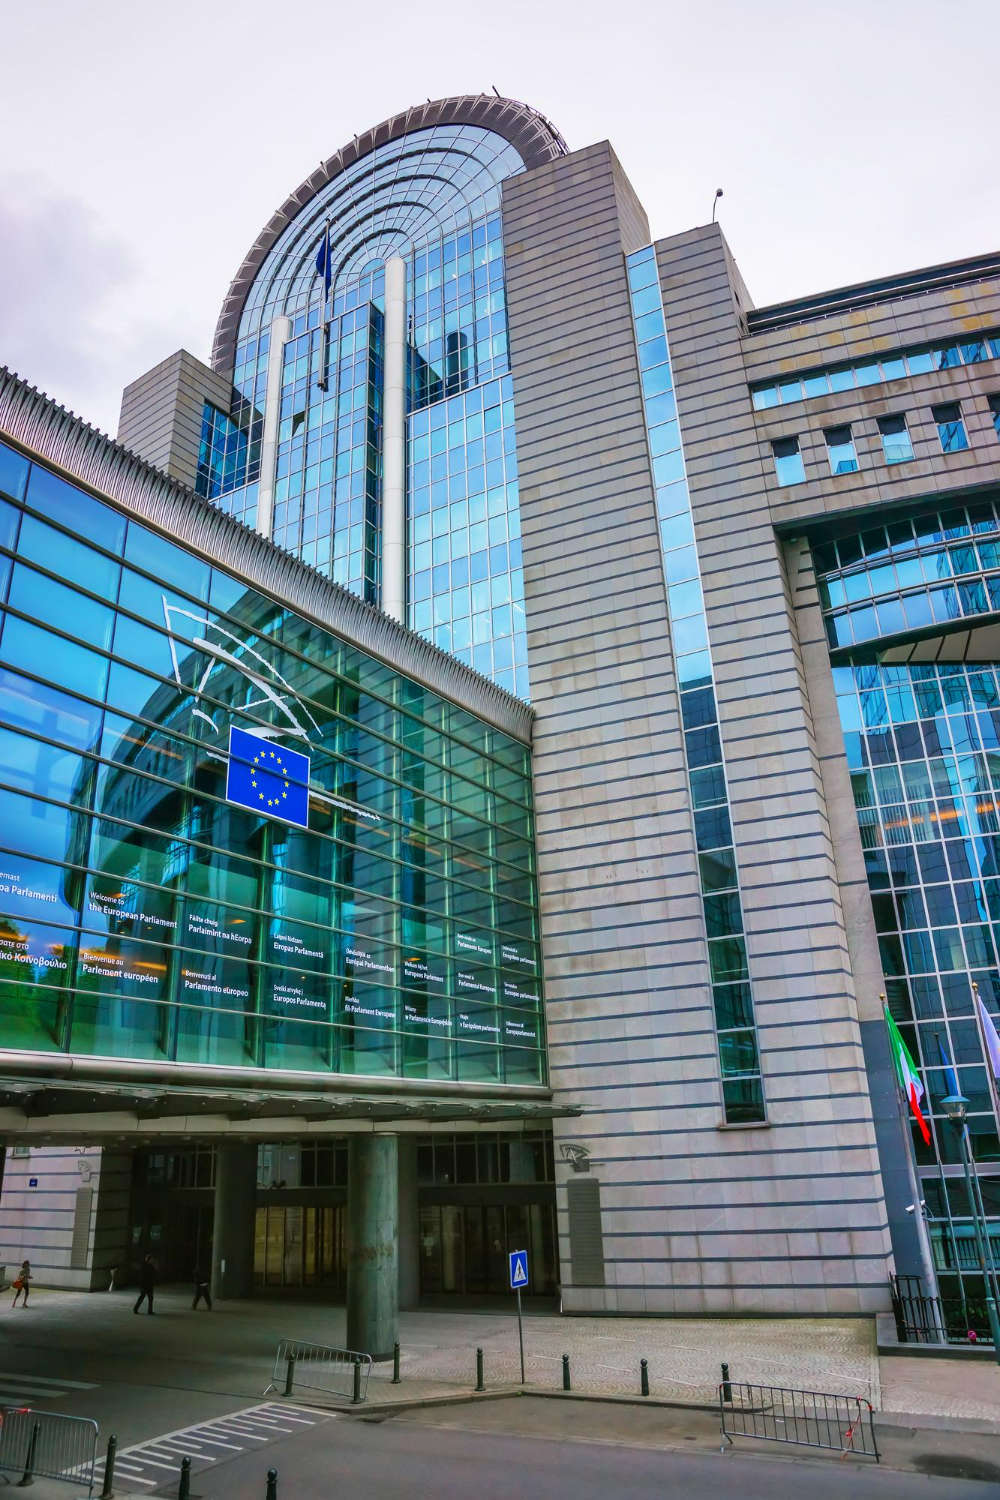 European Parliament of Brussels